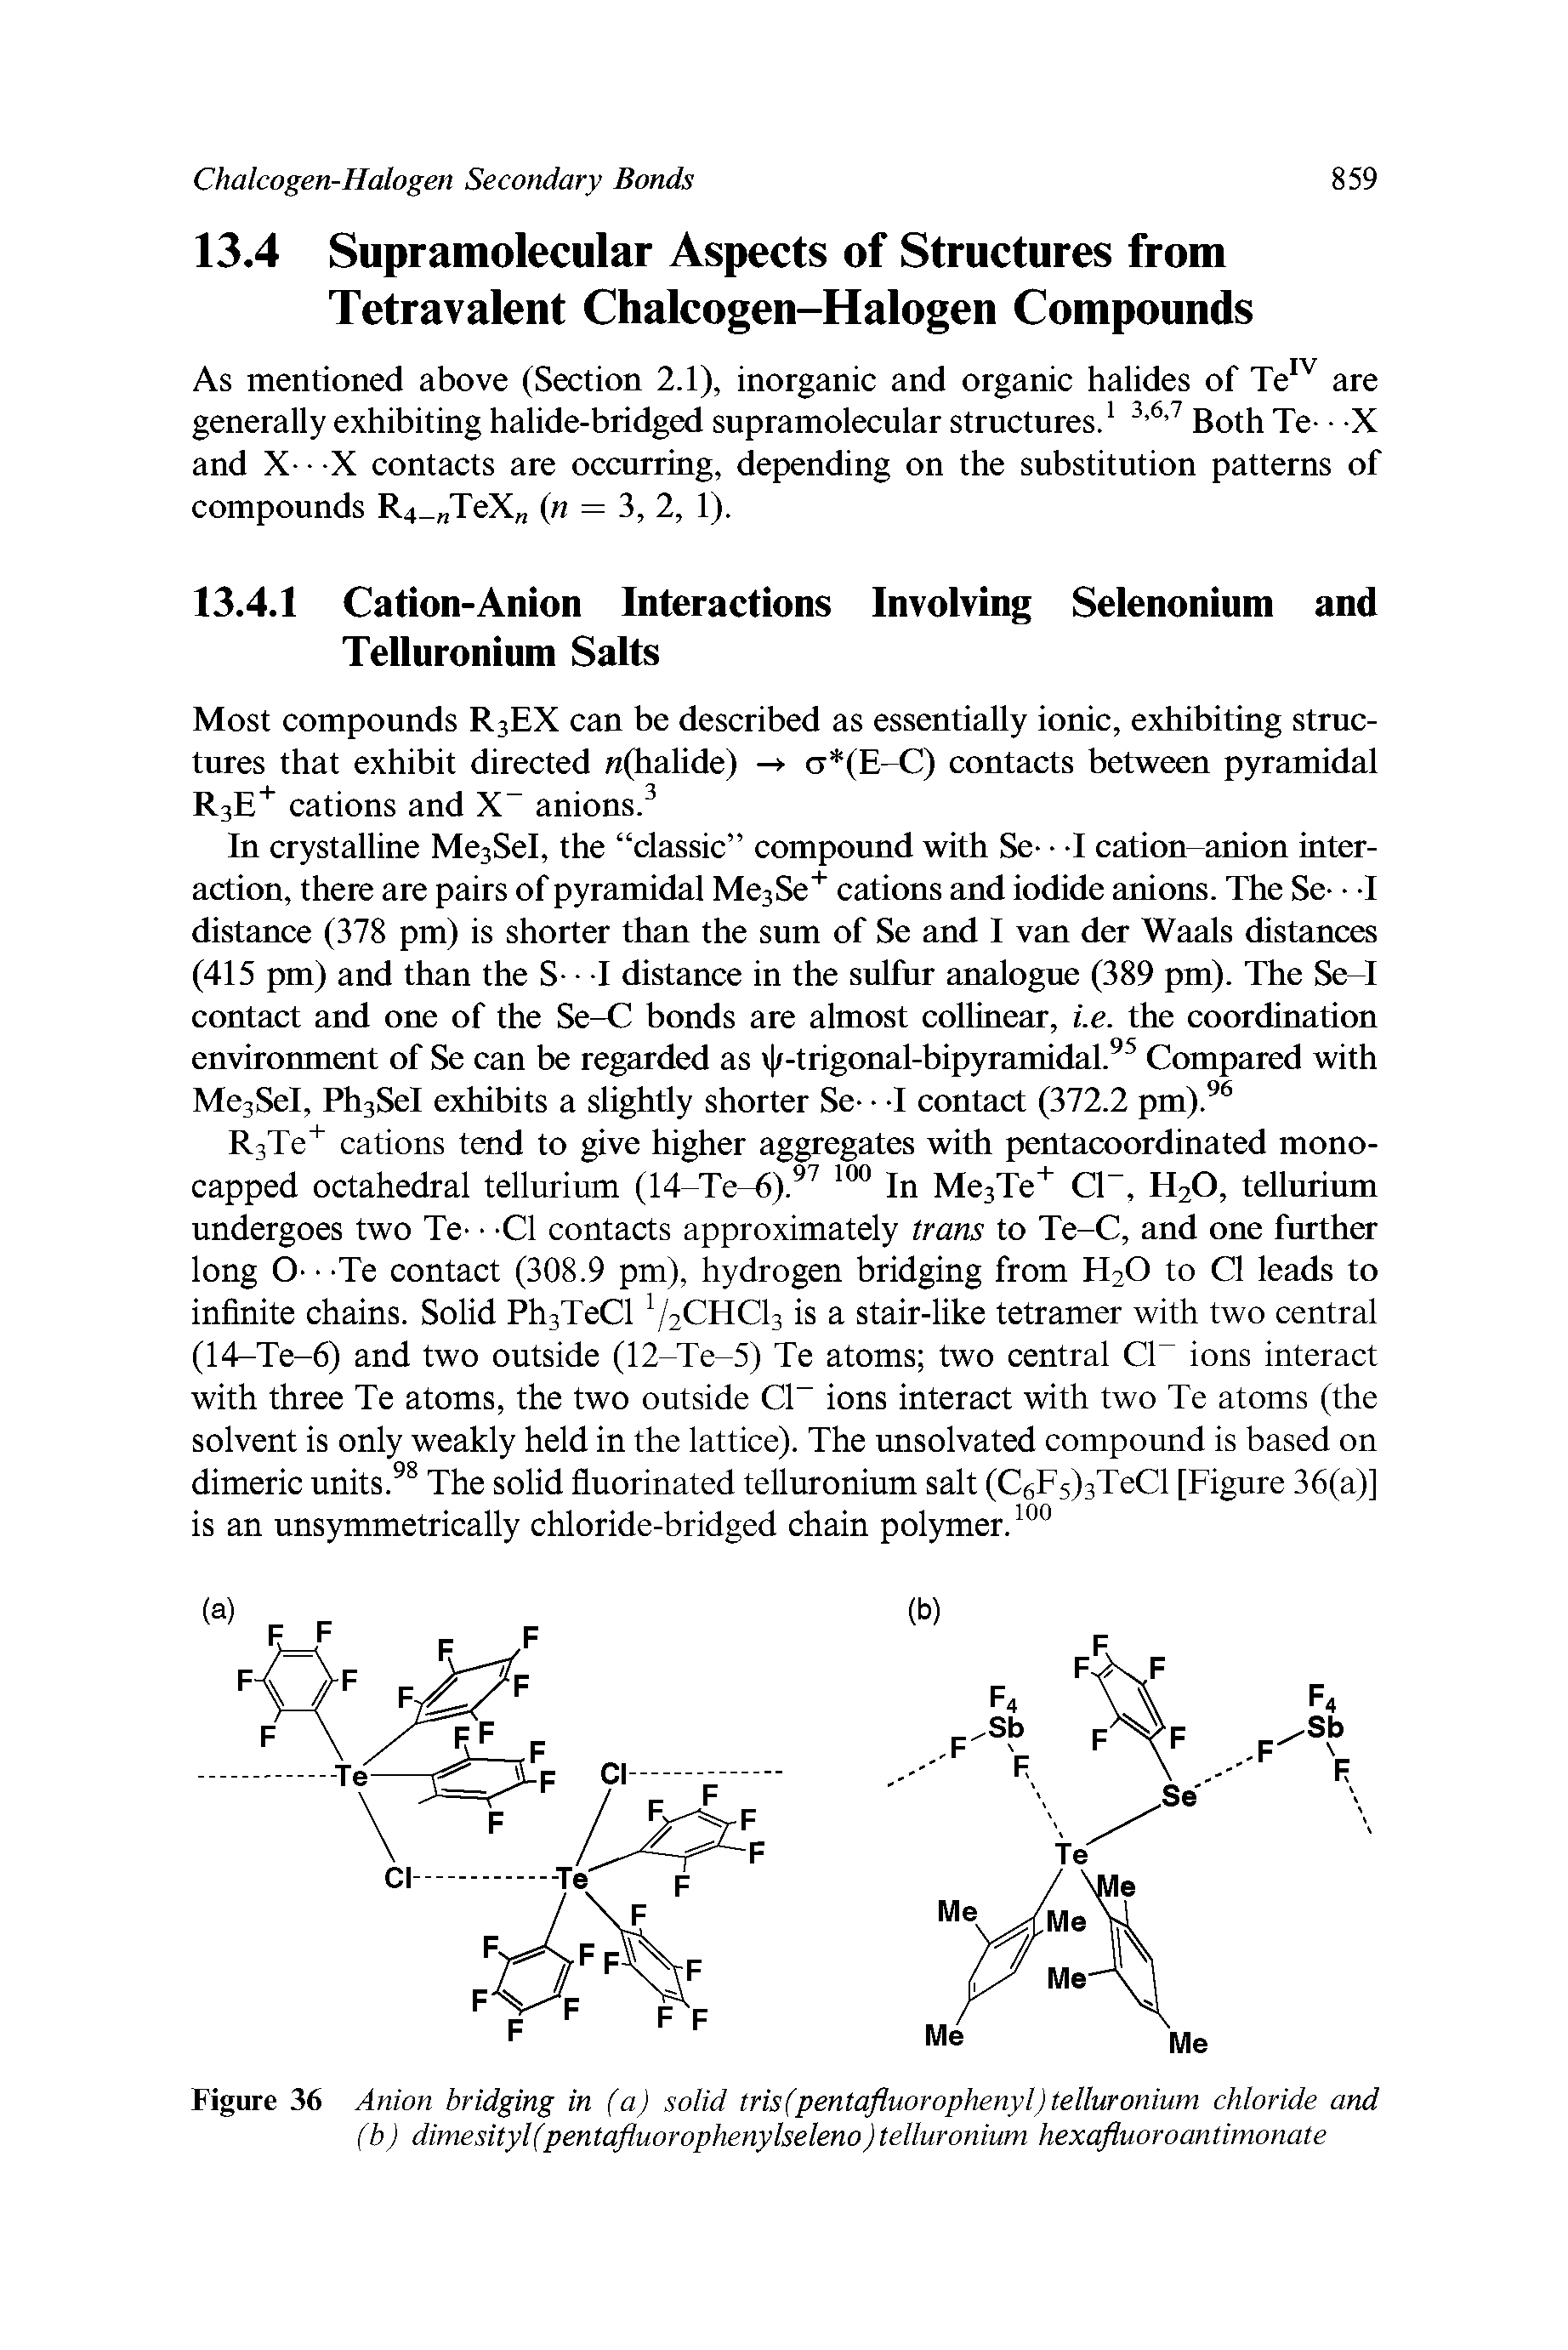 Figure 36 Anion bridging in (a) solid tris(pentafluorophenyl) telluronium chloride and (b) dimesityl(pentafluorophenylseleno) telluronium hexafluoroantimonate...